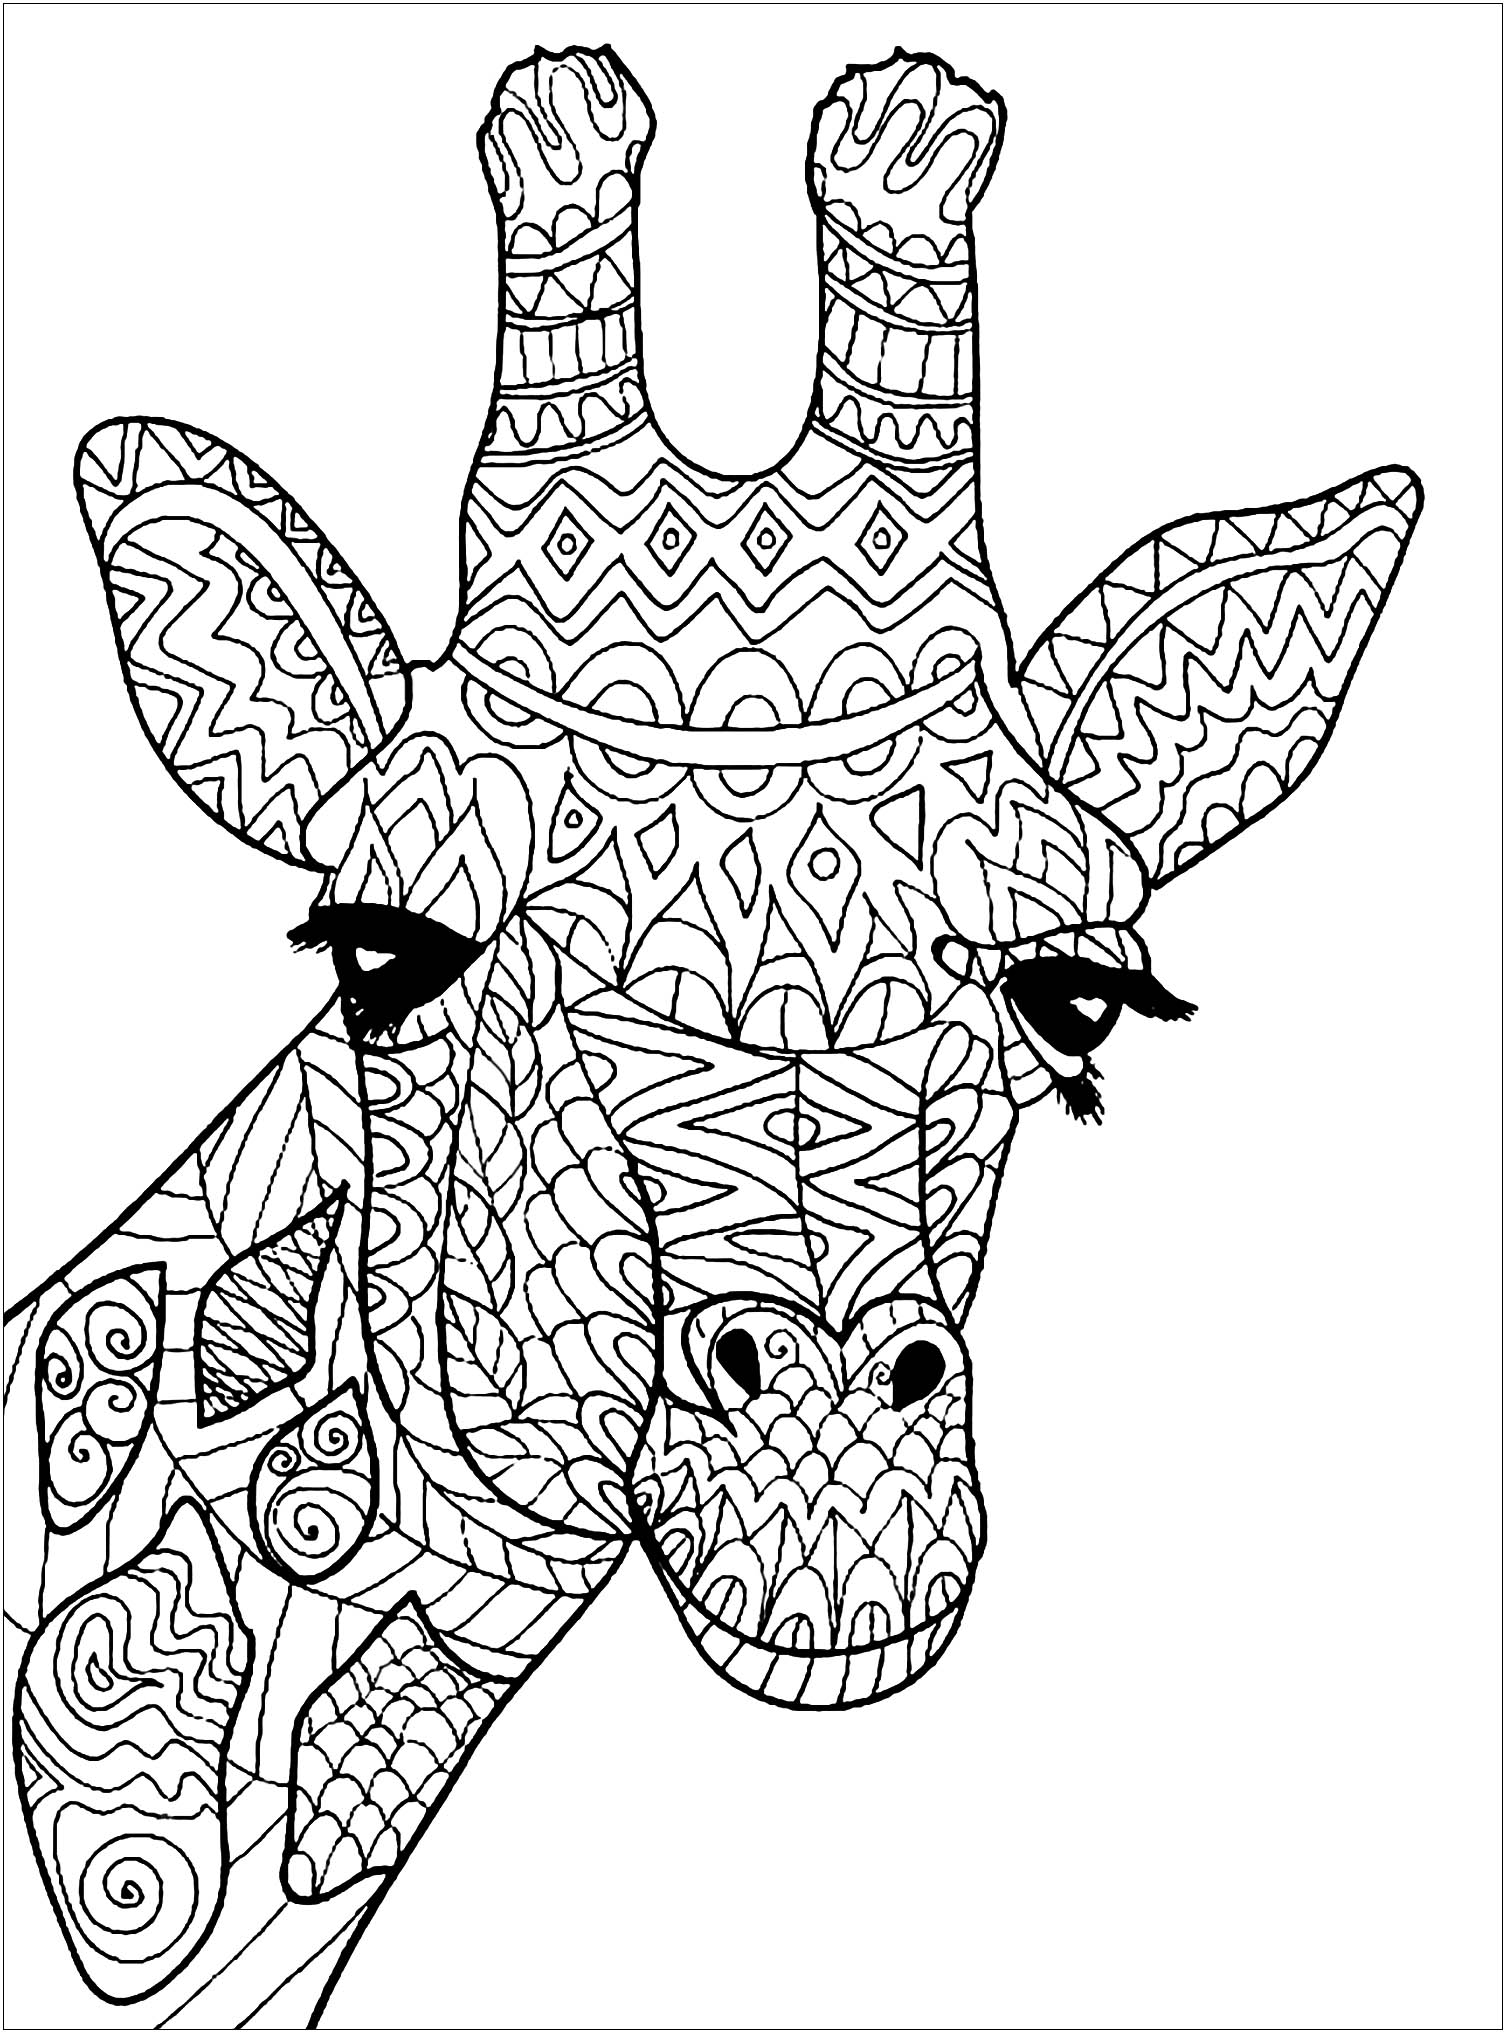 Une jolie tête de girafe avec de jolis motifs